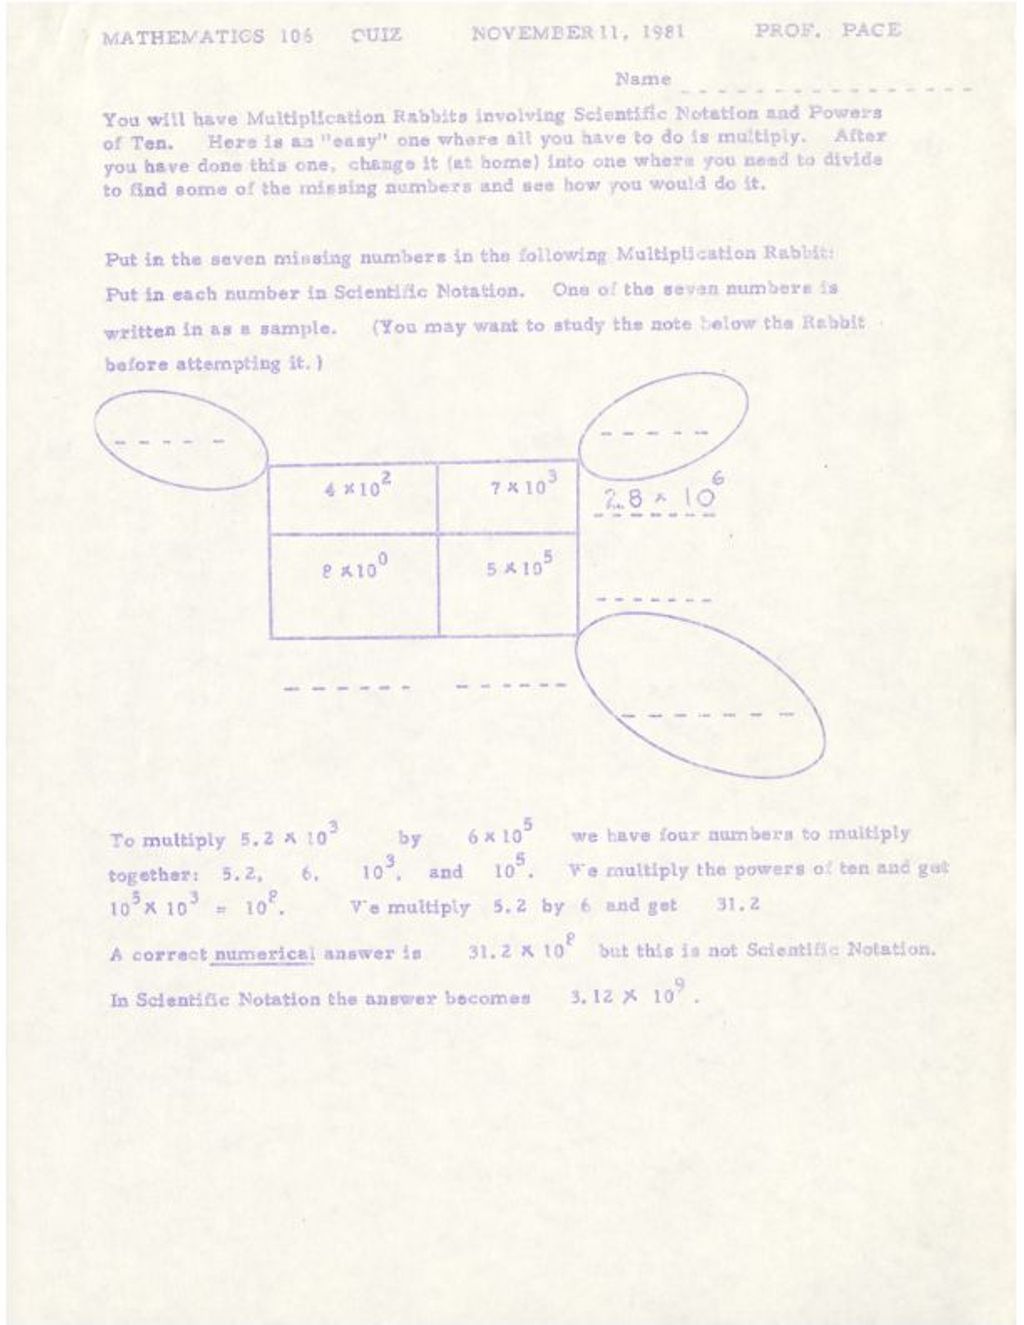 Miniature of Mathematics106 Quiz Nov. 11, 1981 (multiplication rabbits)